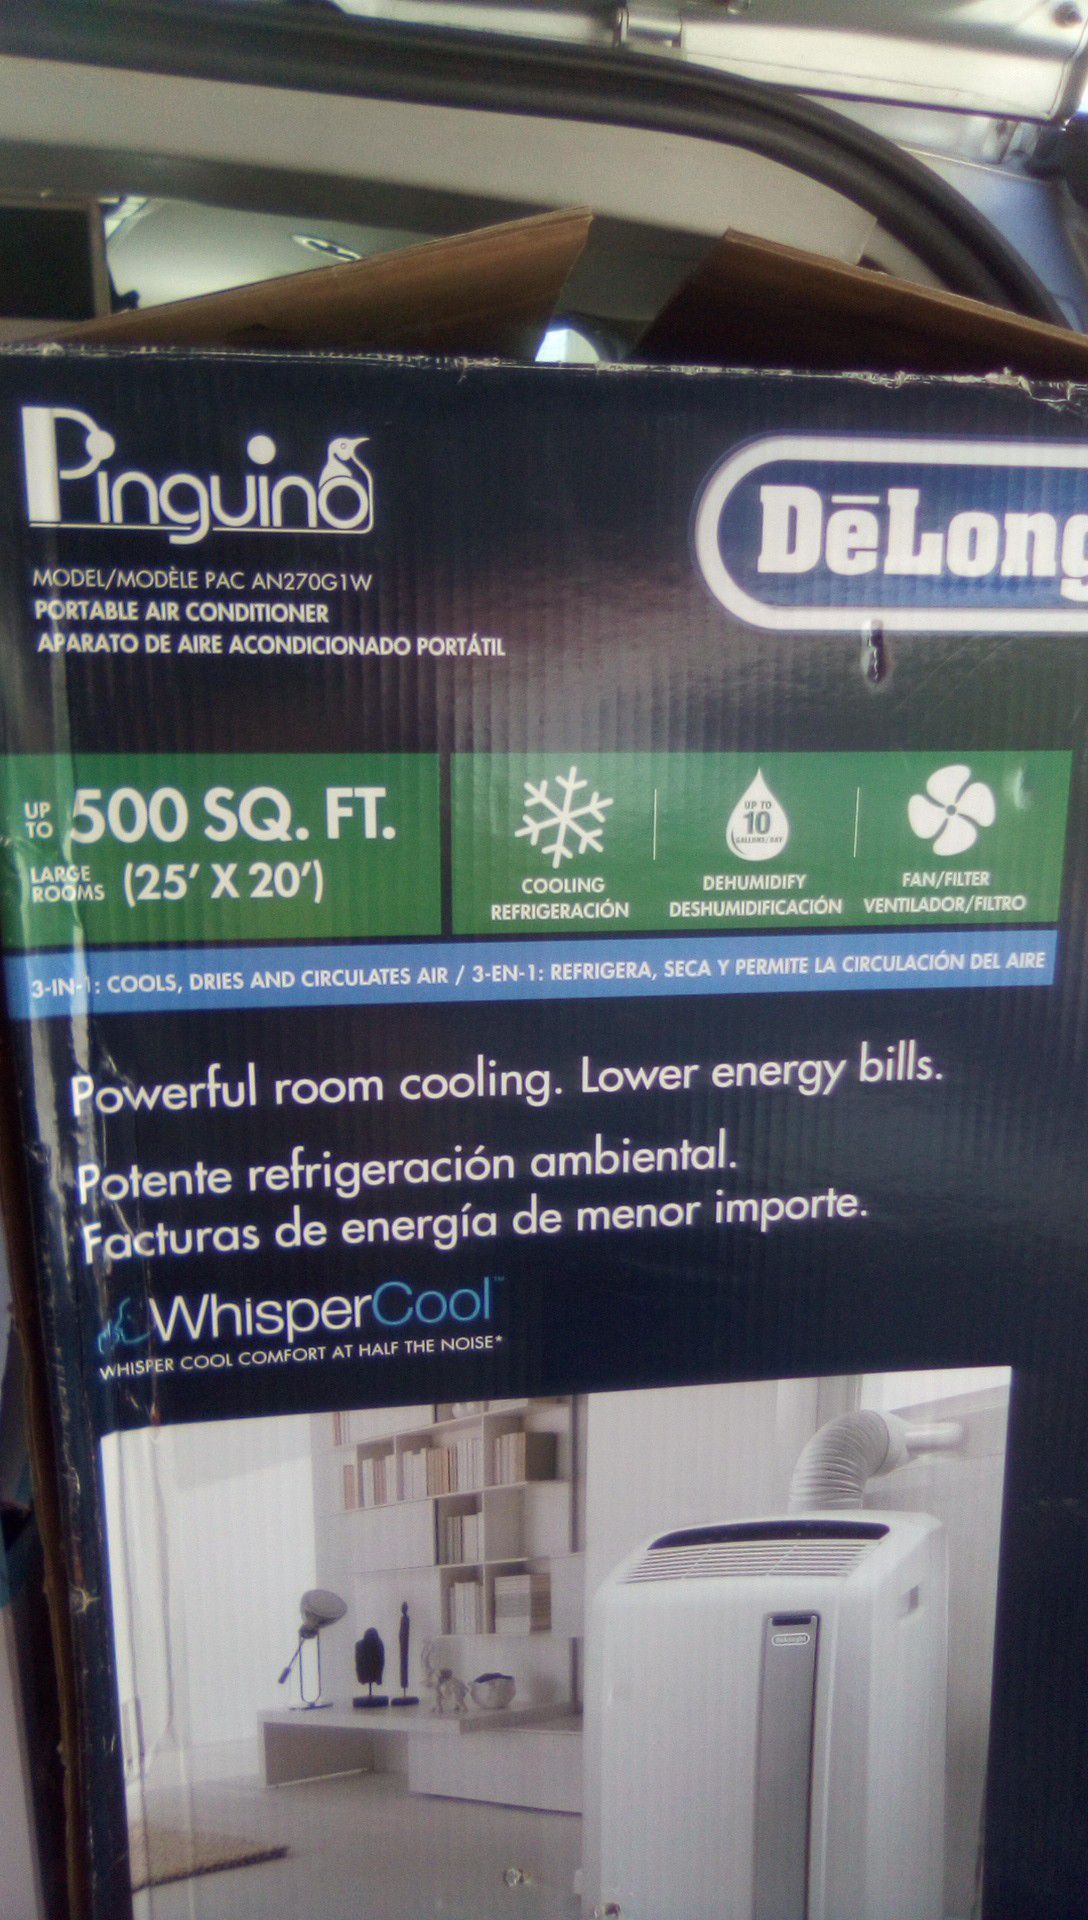 Delonghi portable air conditioner, 12000btu